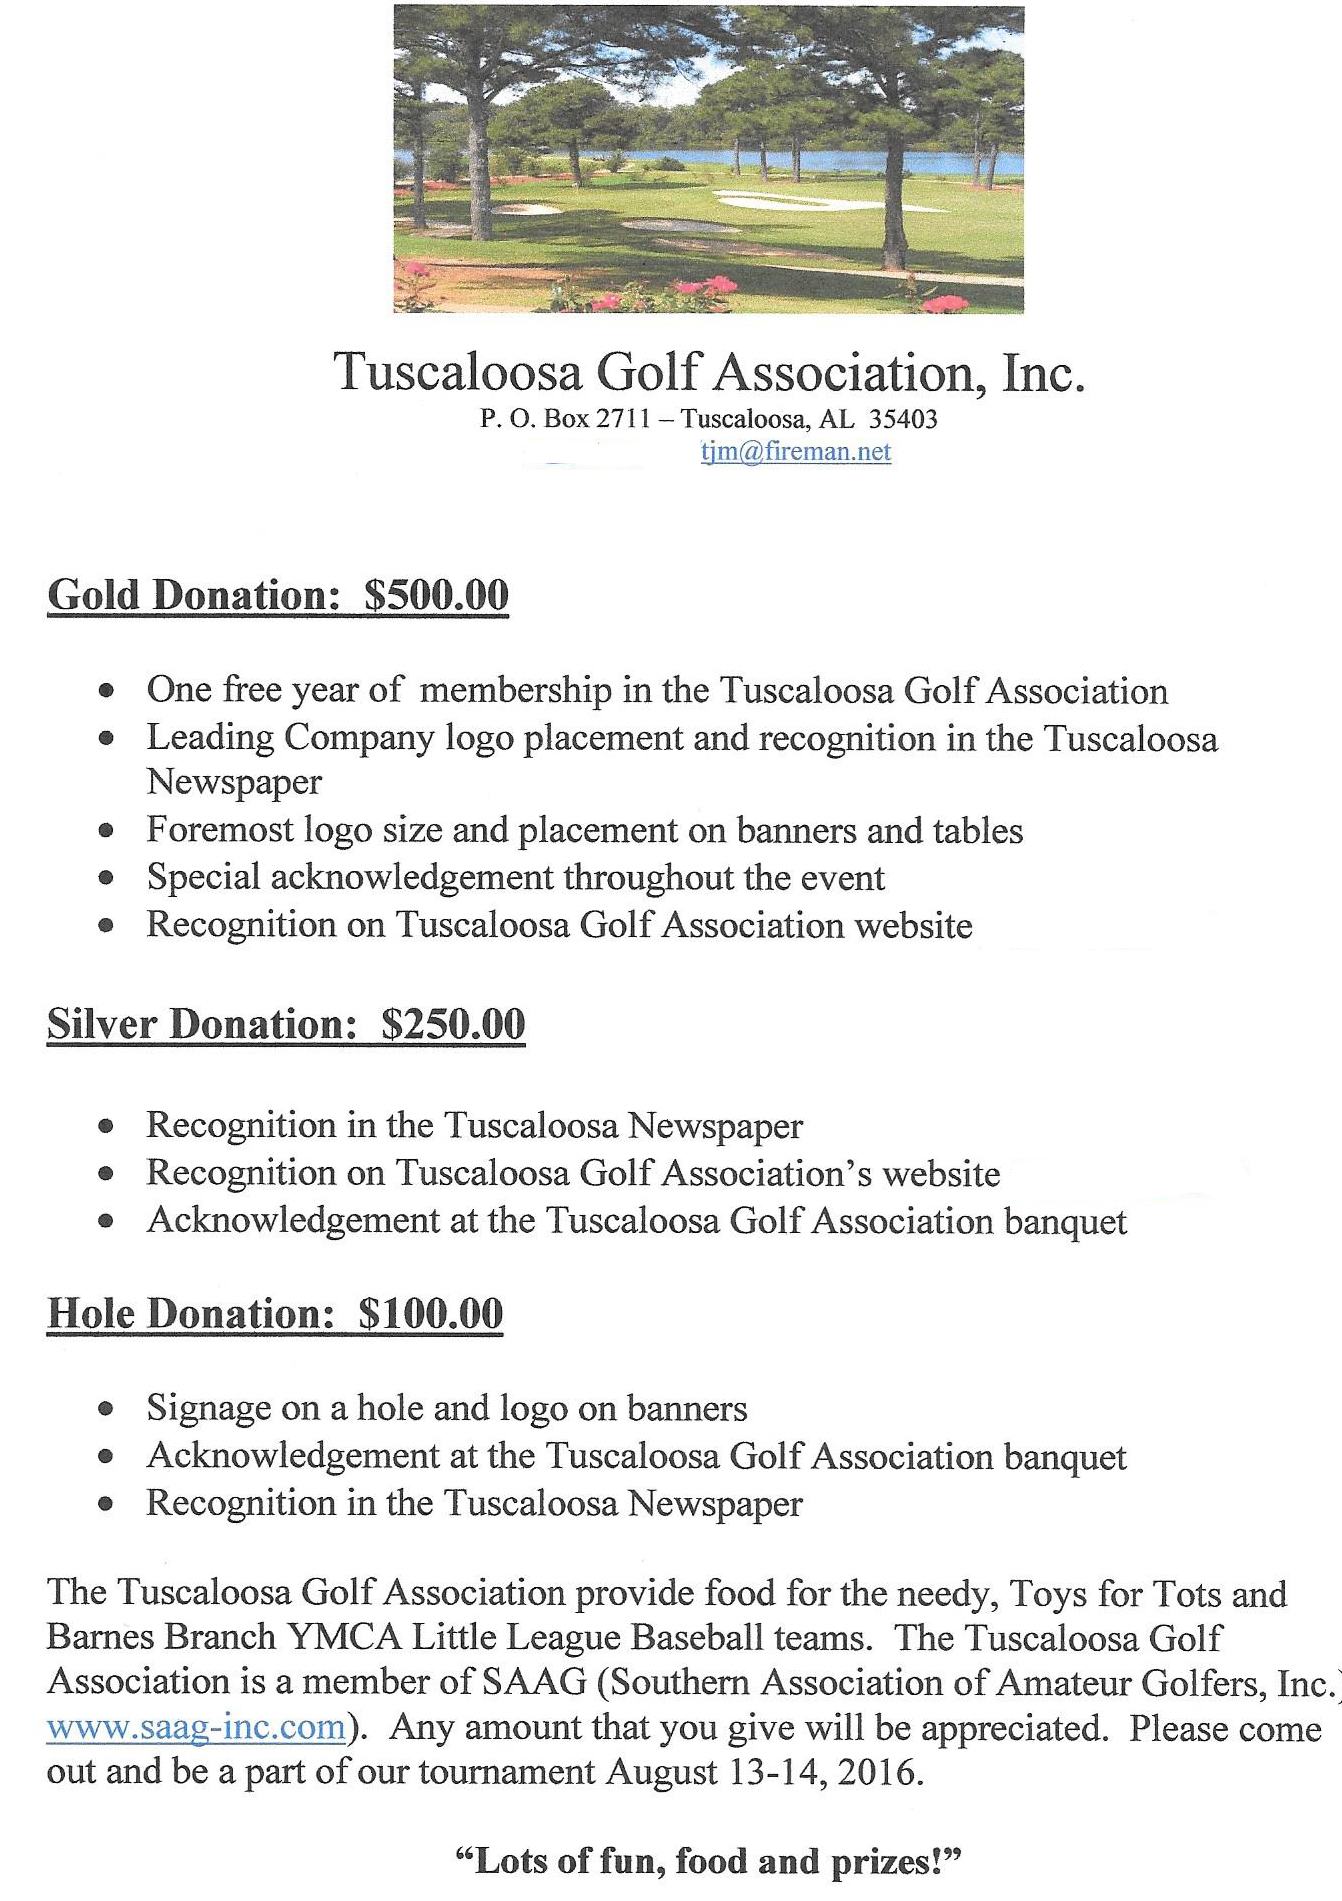 Information from Tuscaloosa Golf Association